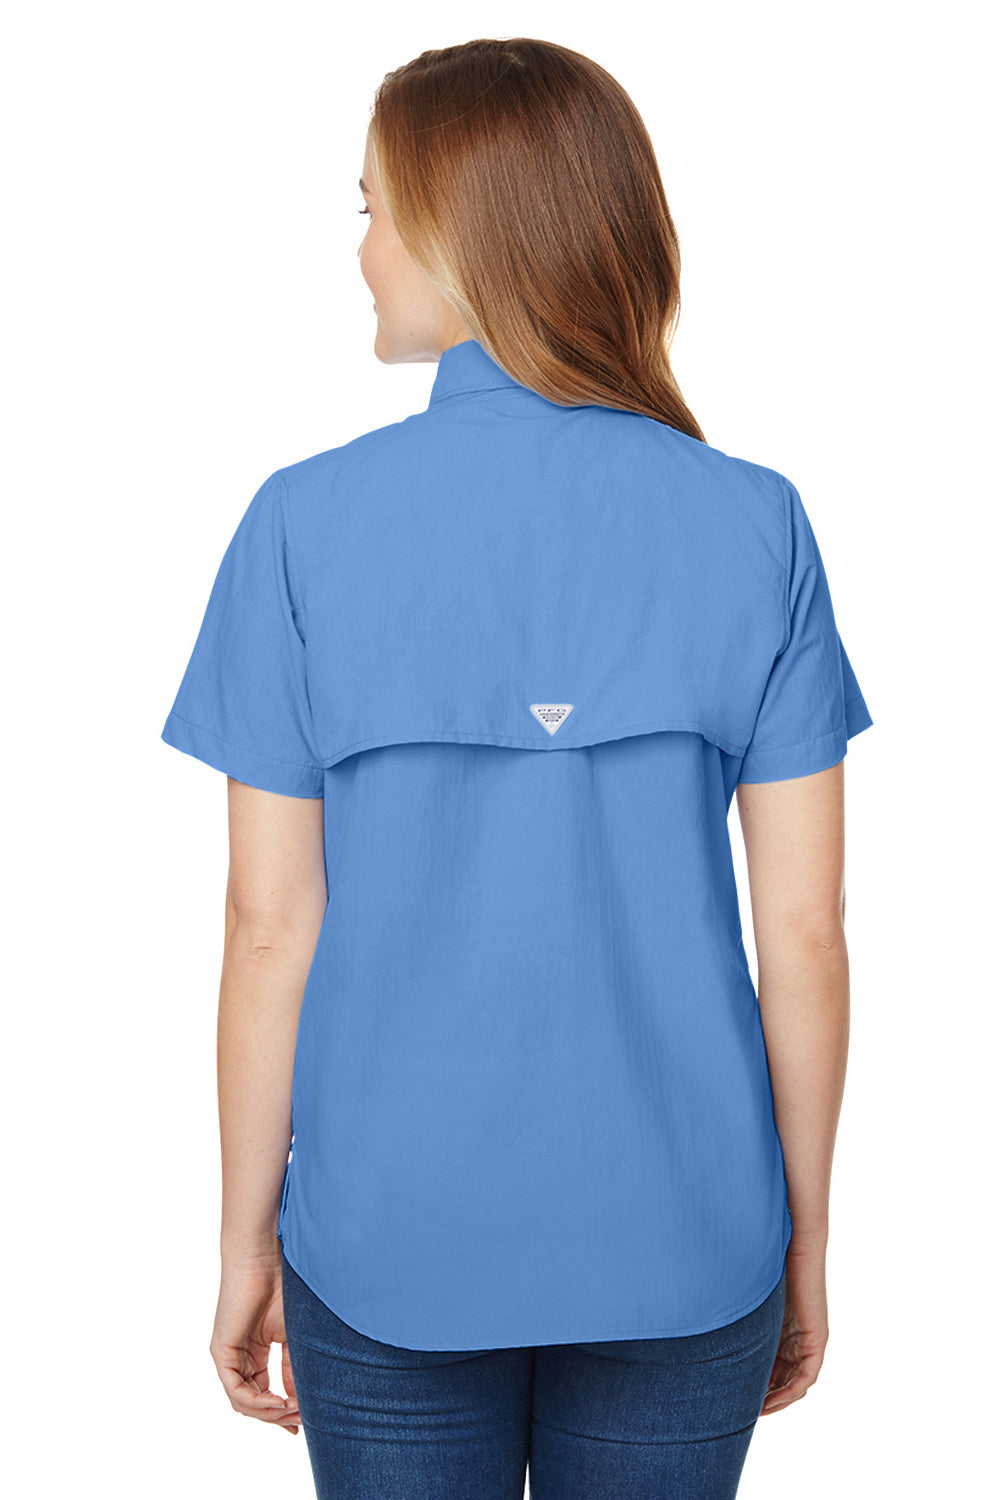 Columbia 7313 Womens Bahama Moisture Wicking Short Sleeve Button Down Shirt w/ Double Pockets White Cap Blue Back